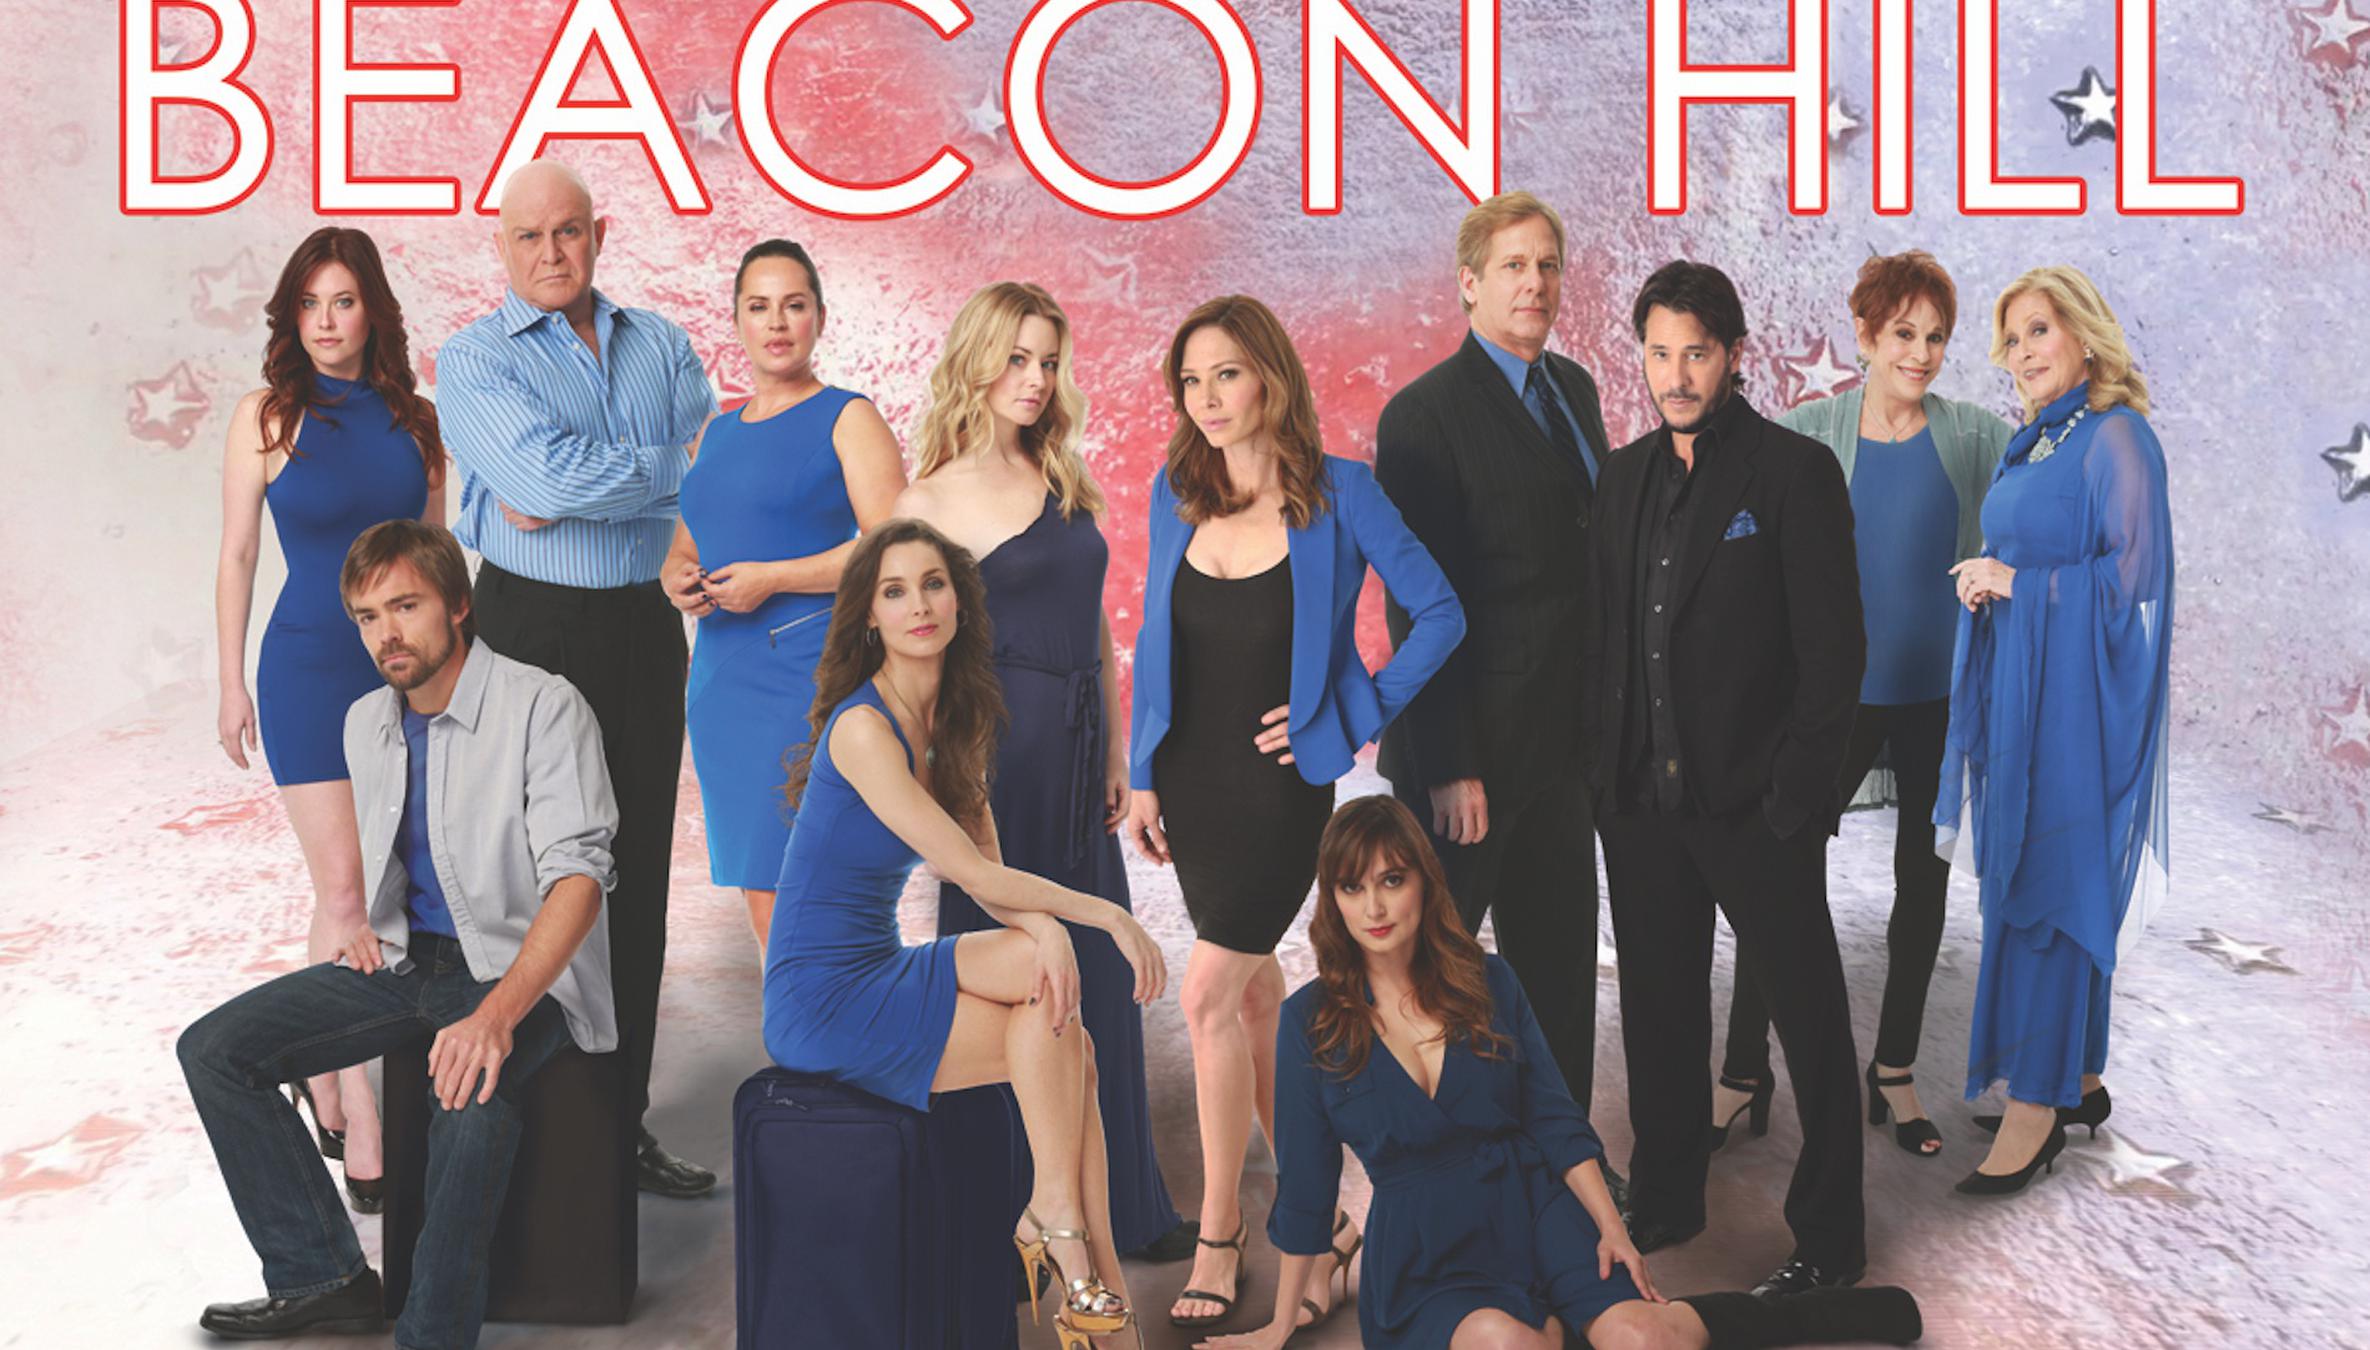 Beacon Hill - Series 1: Episodes 1-4